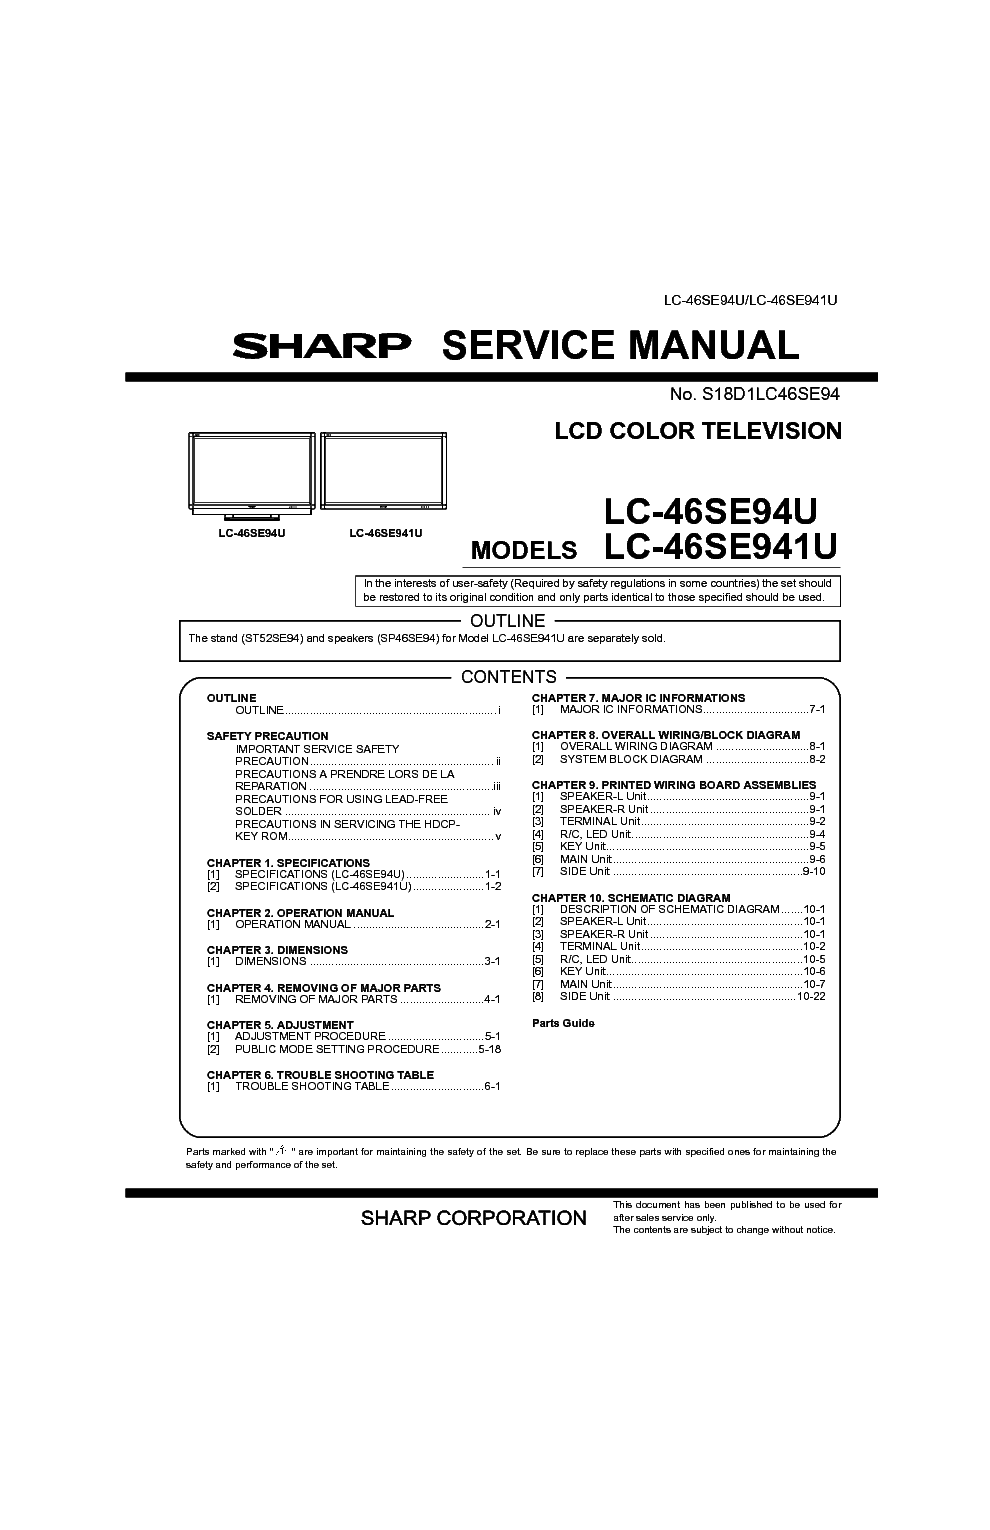 SHARP LC46SE94 941U service manual (1st page)